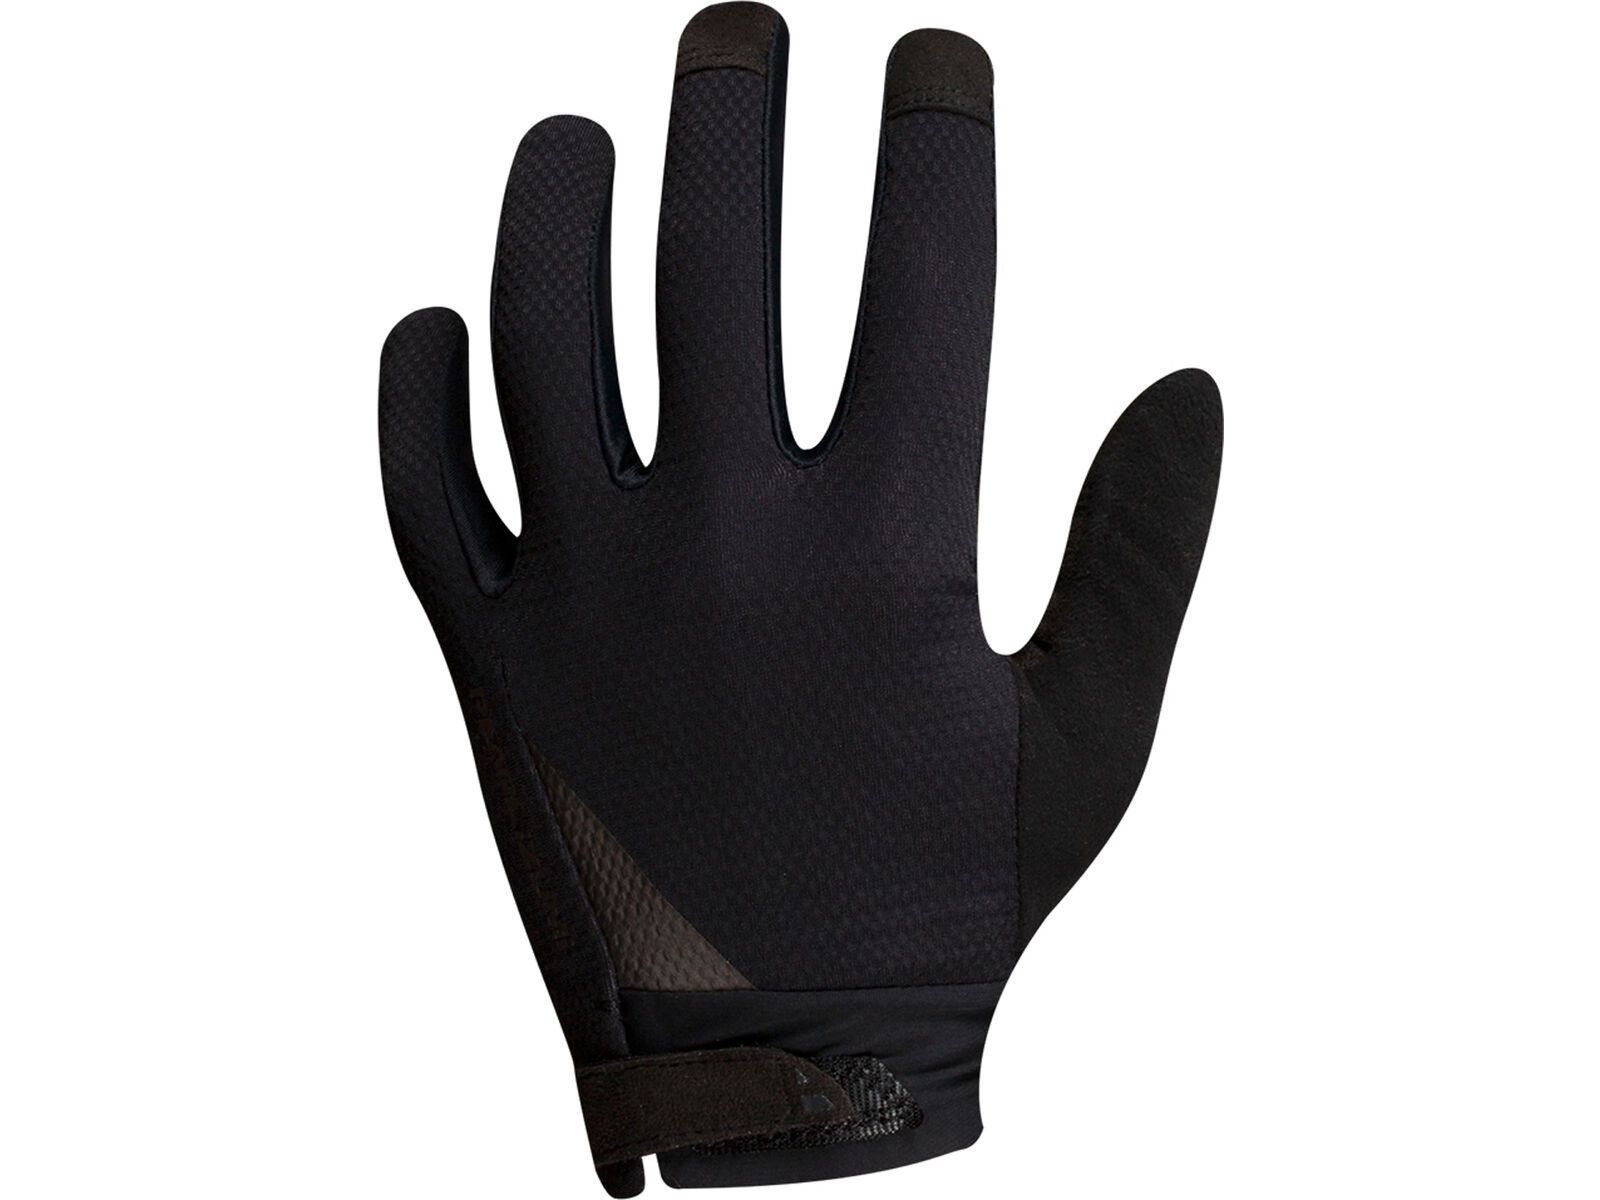 Pearl Izumi Elite Gel FF Glove, black | Bild 1